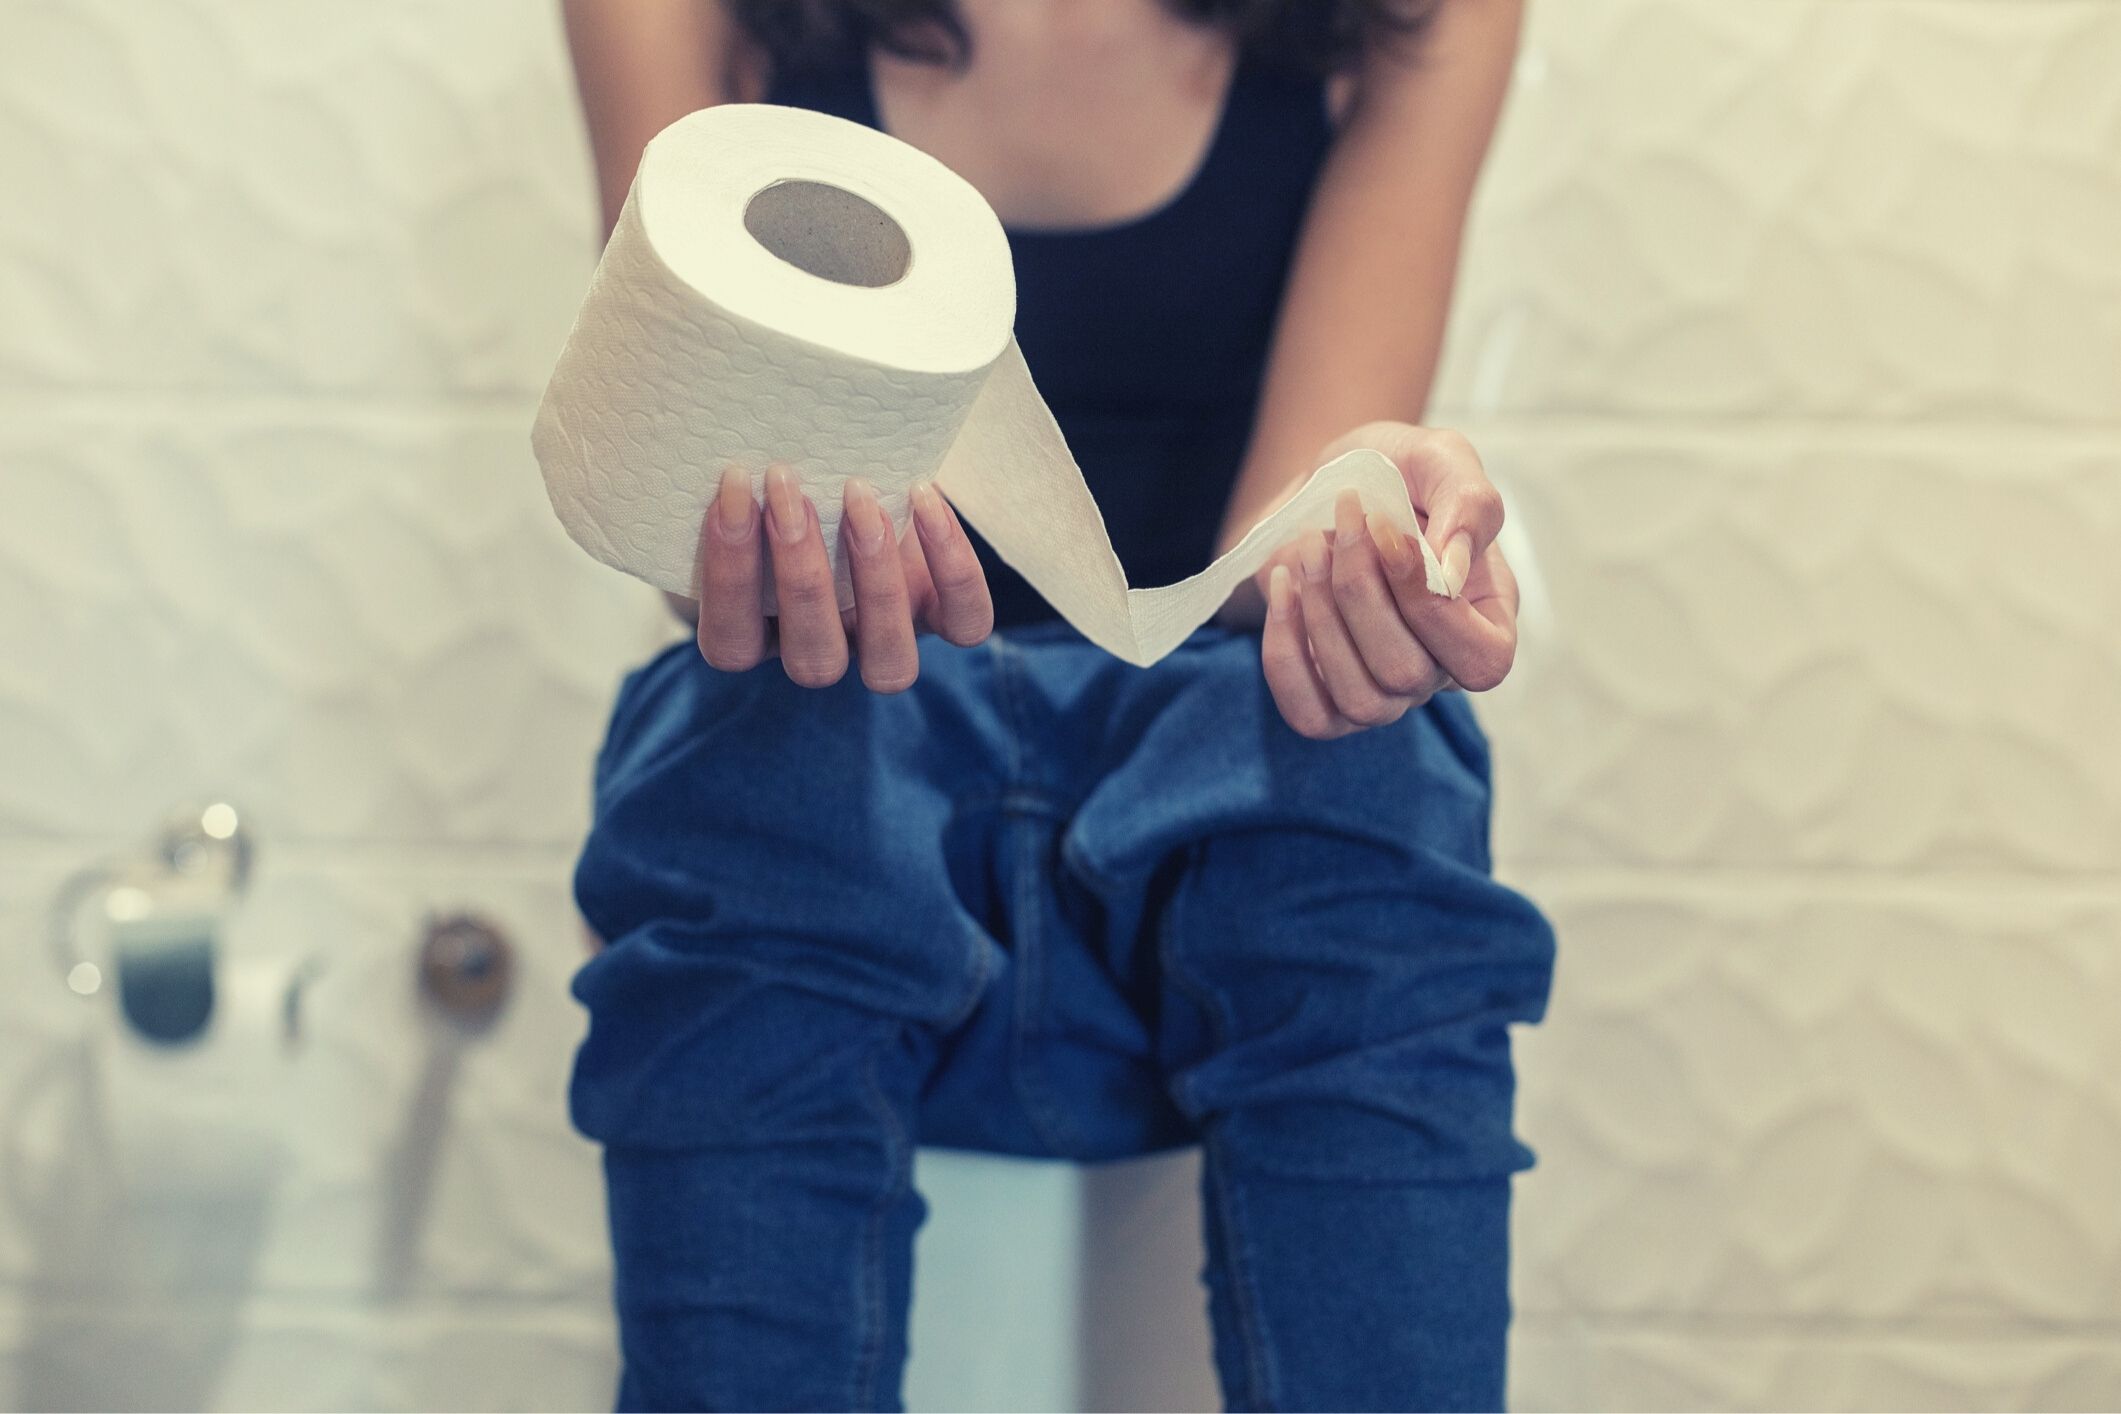 Woman sitting on toilet